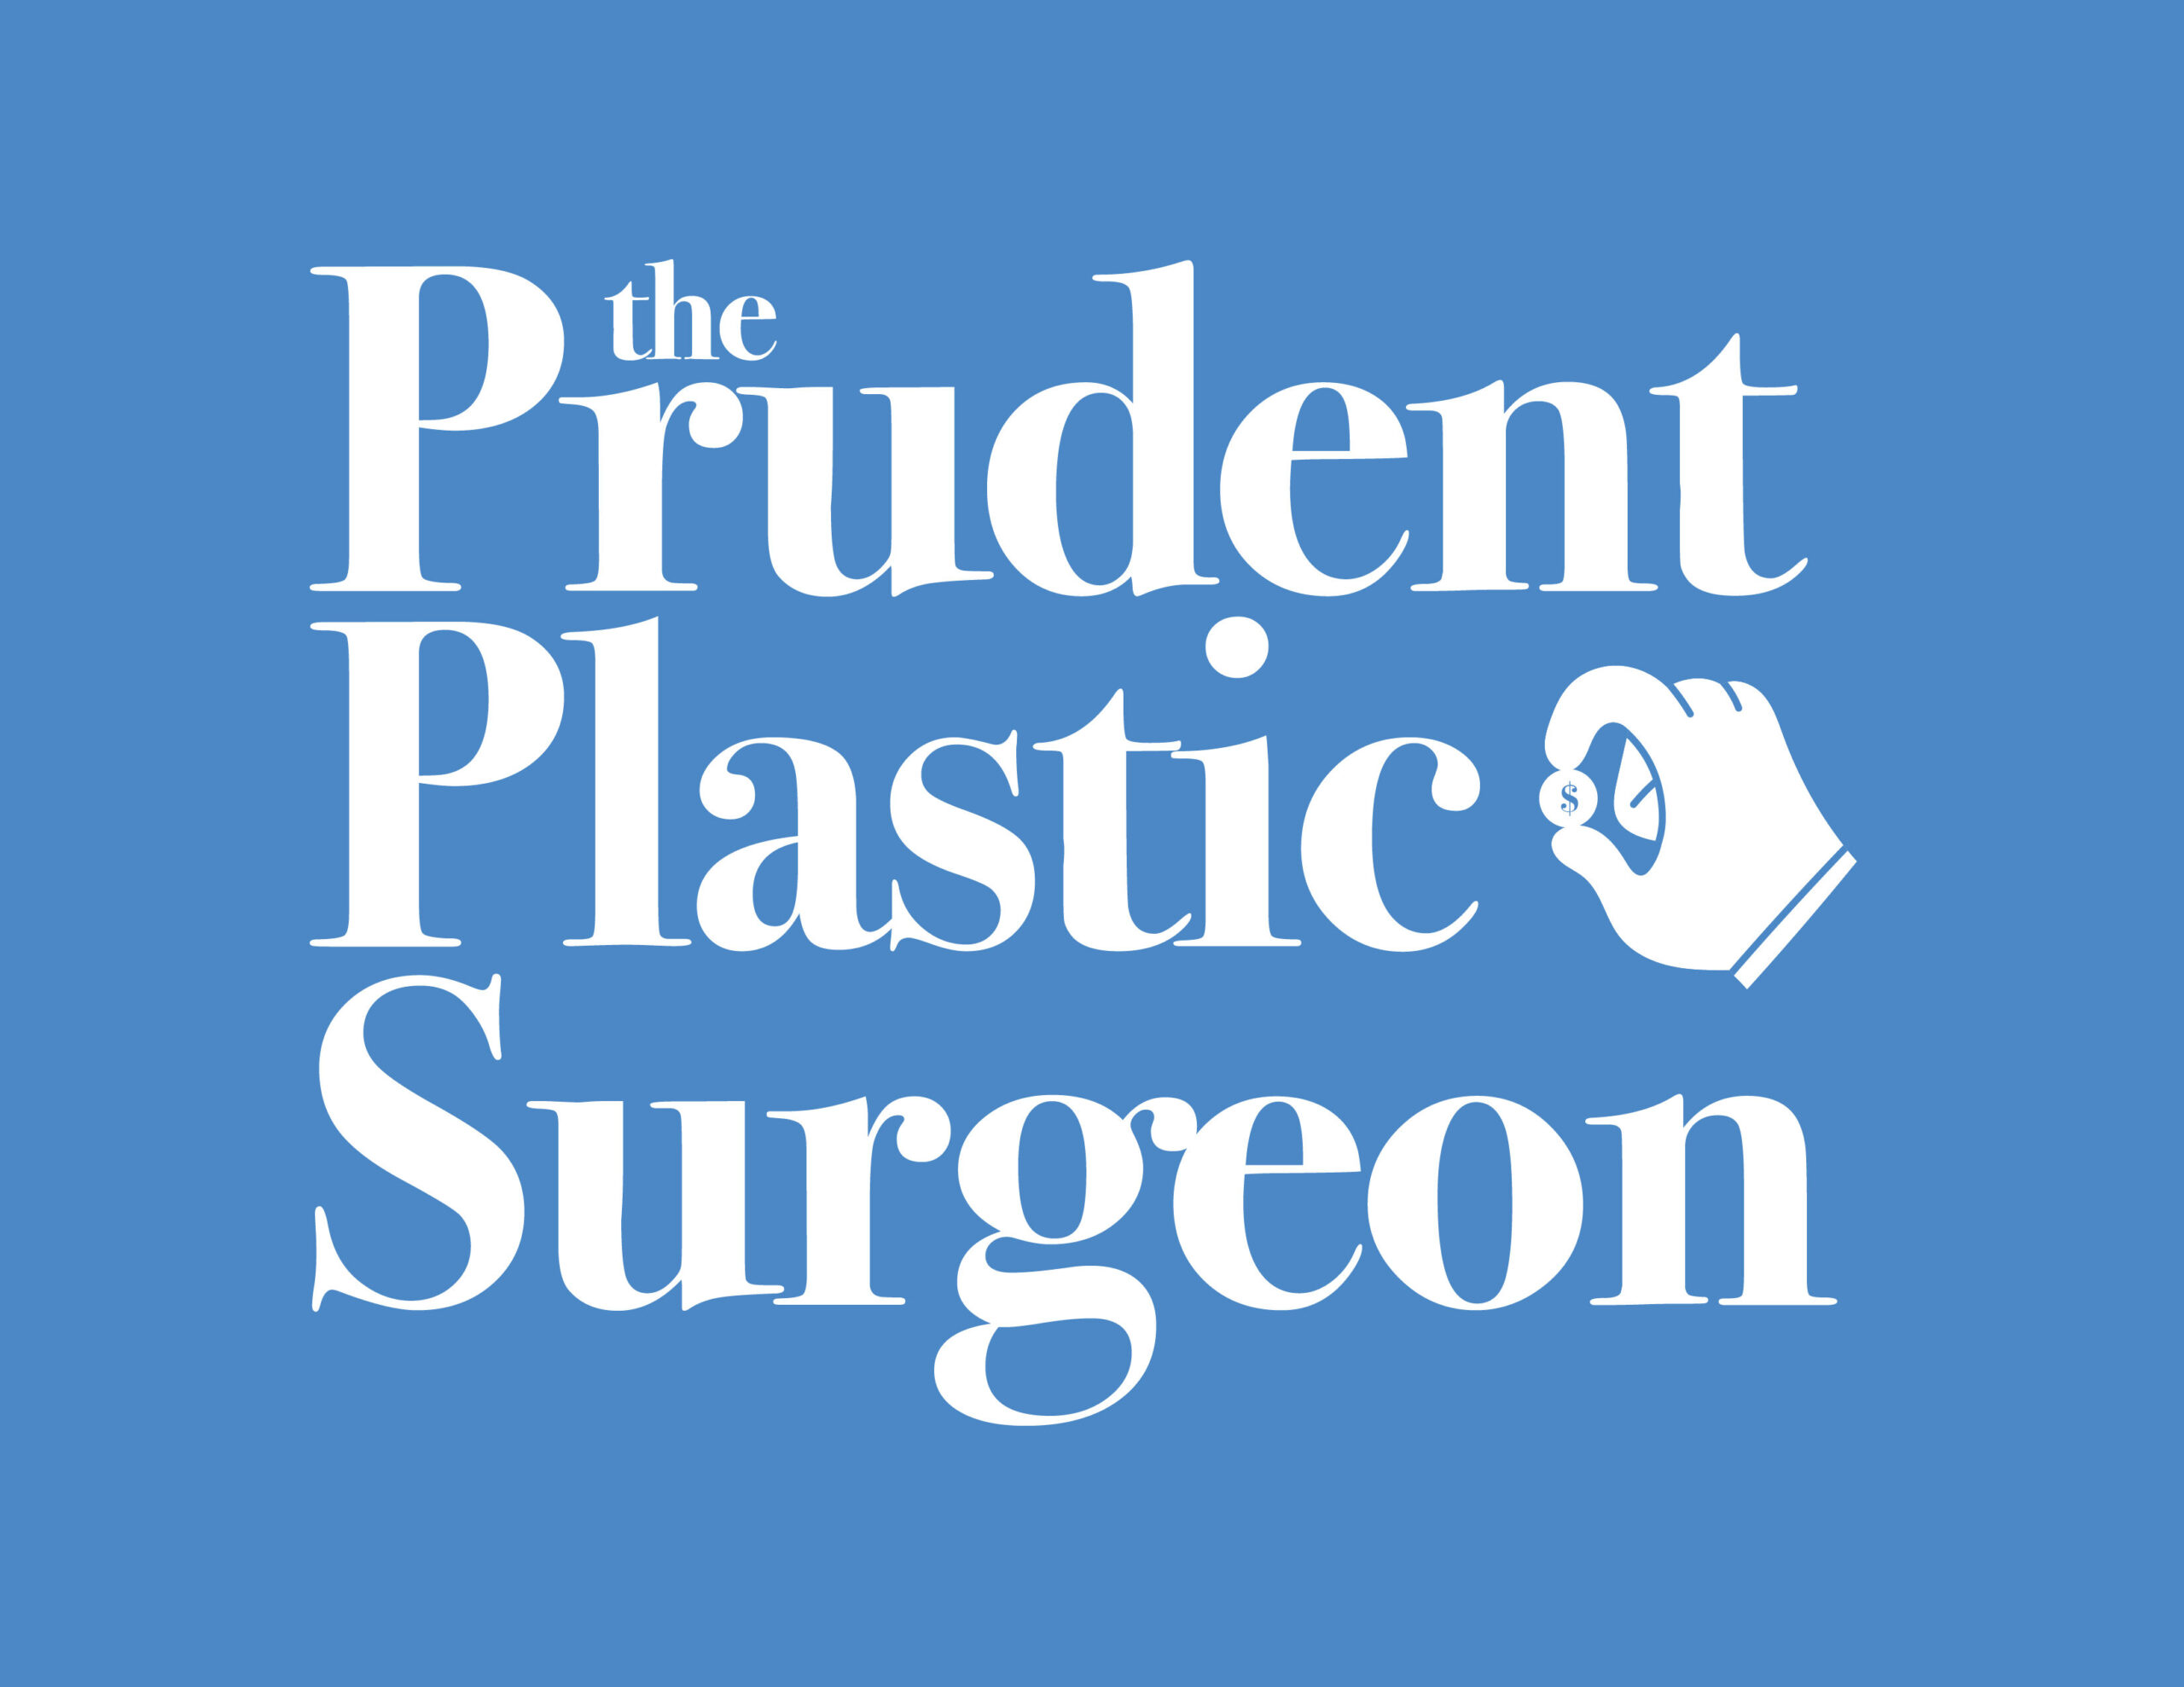 The Prudent Plastic Surgeon